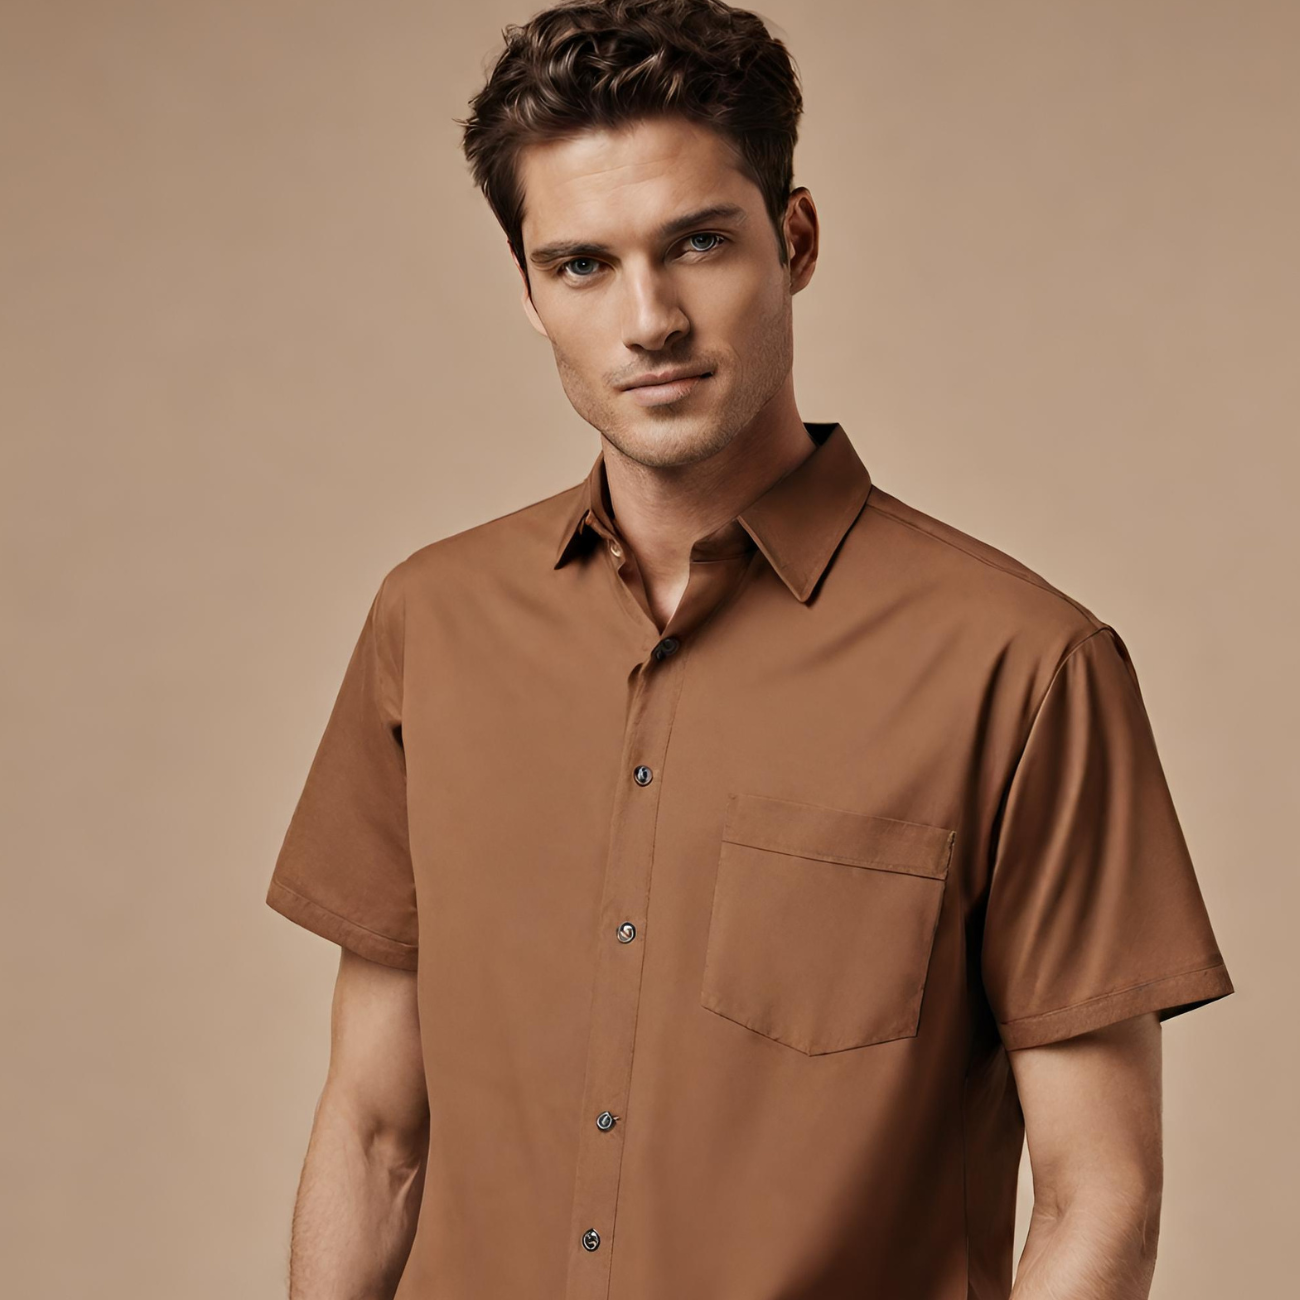 men wearing brown short sleeve shirt